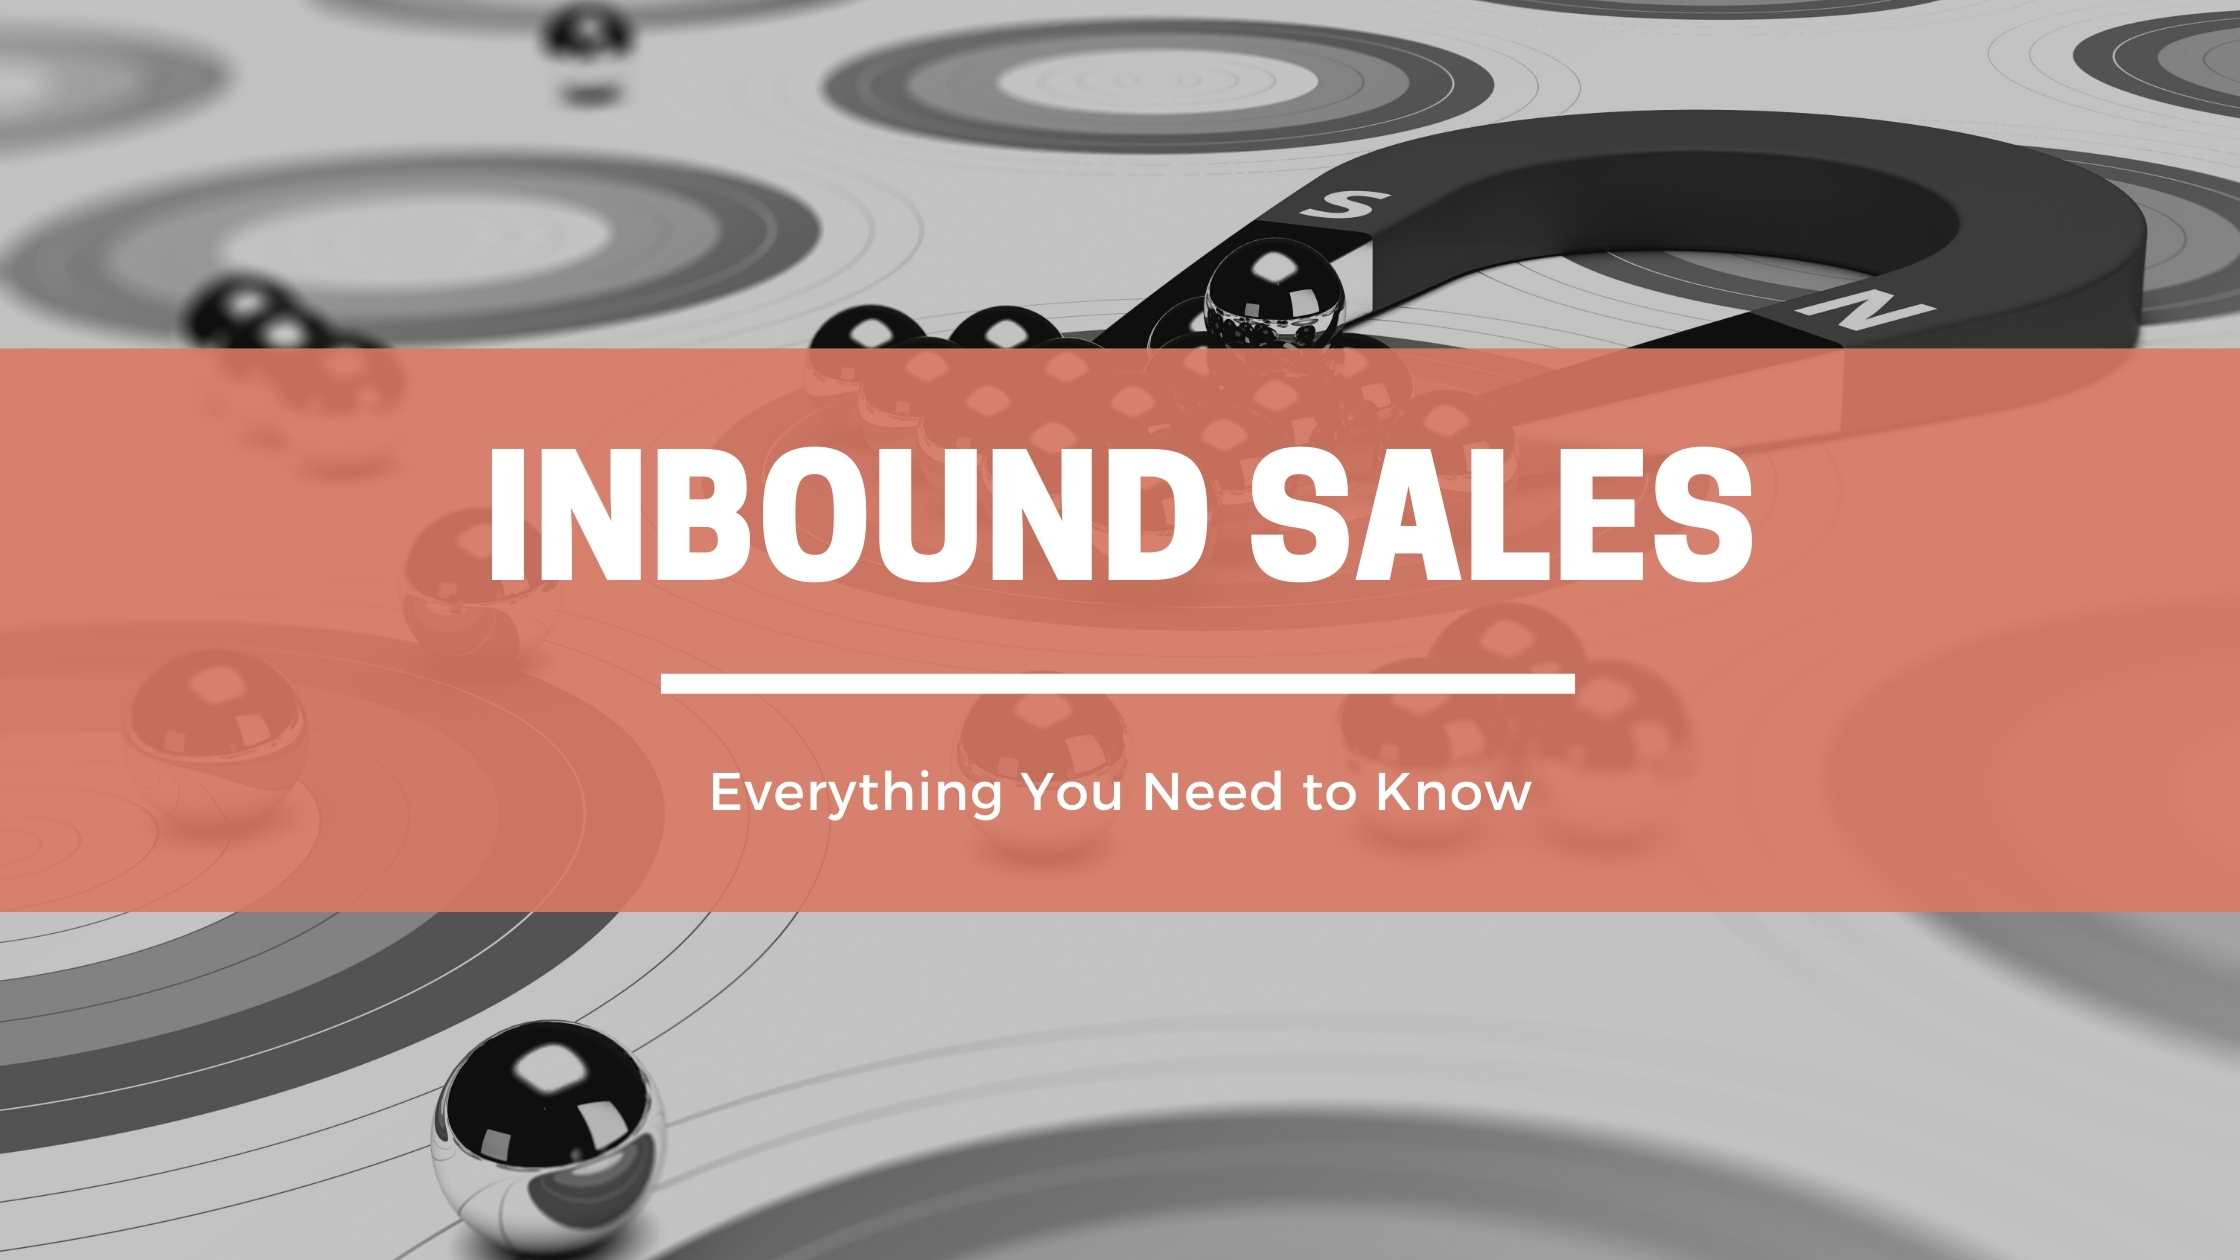 Inbound sales header image with a lead magnet background.